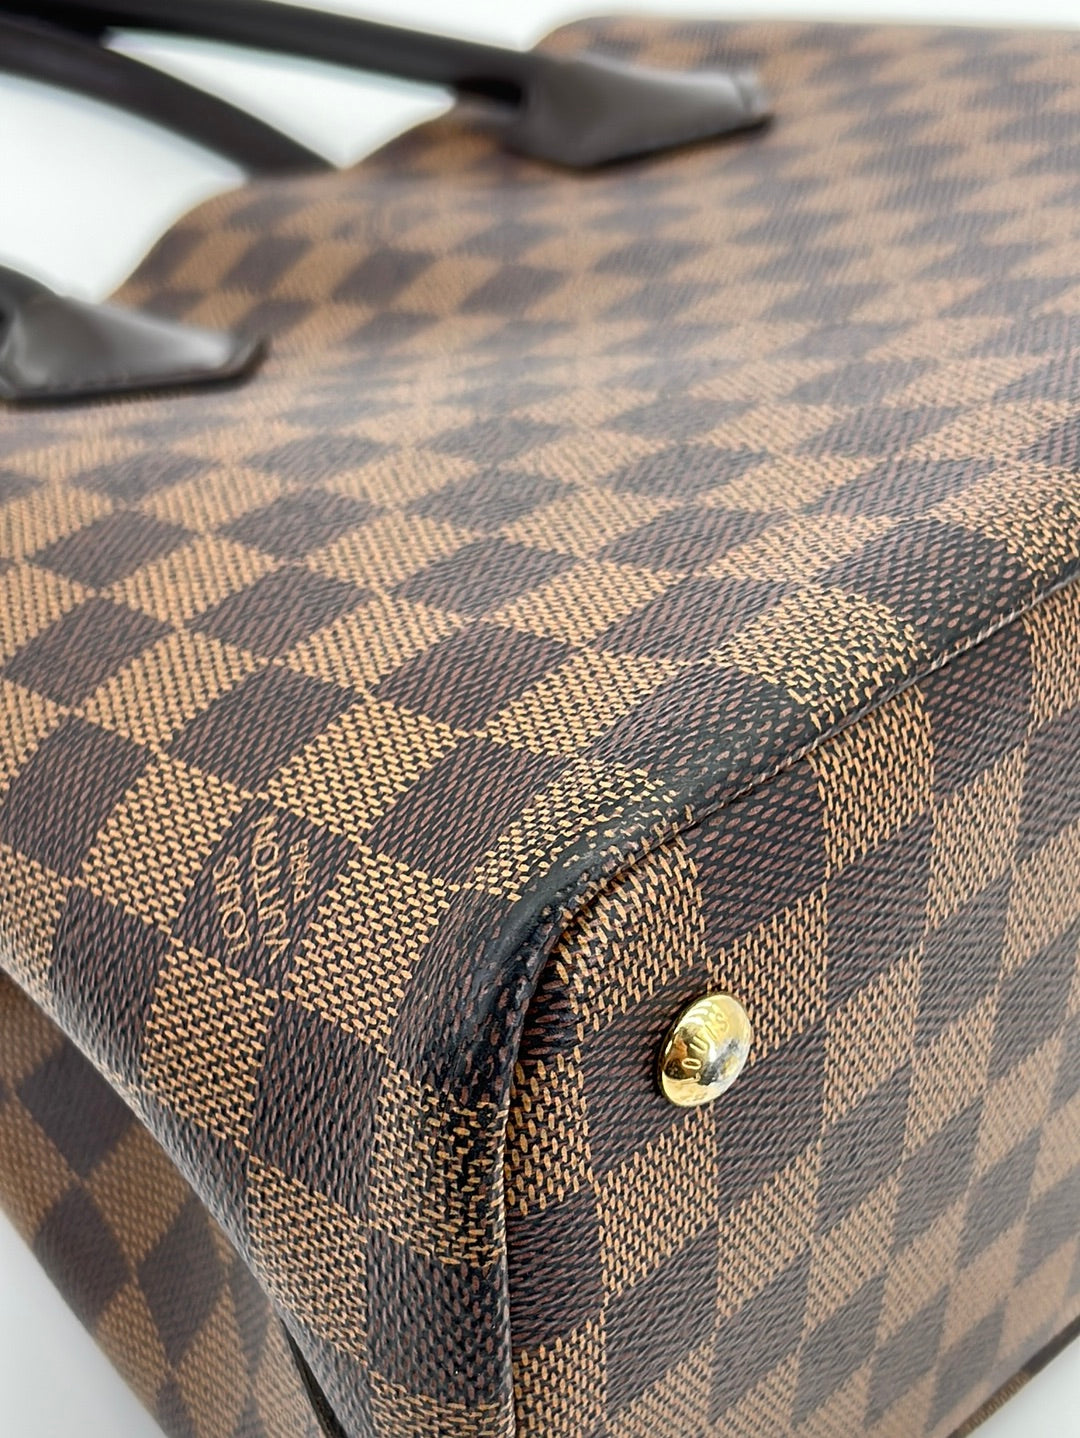 Louis Vuitton Kensington Handbag 328016